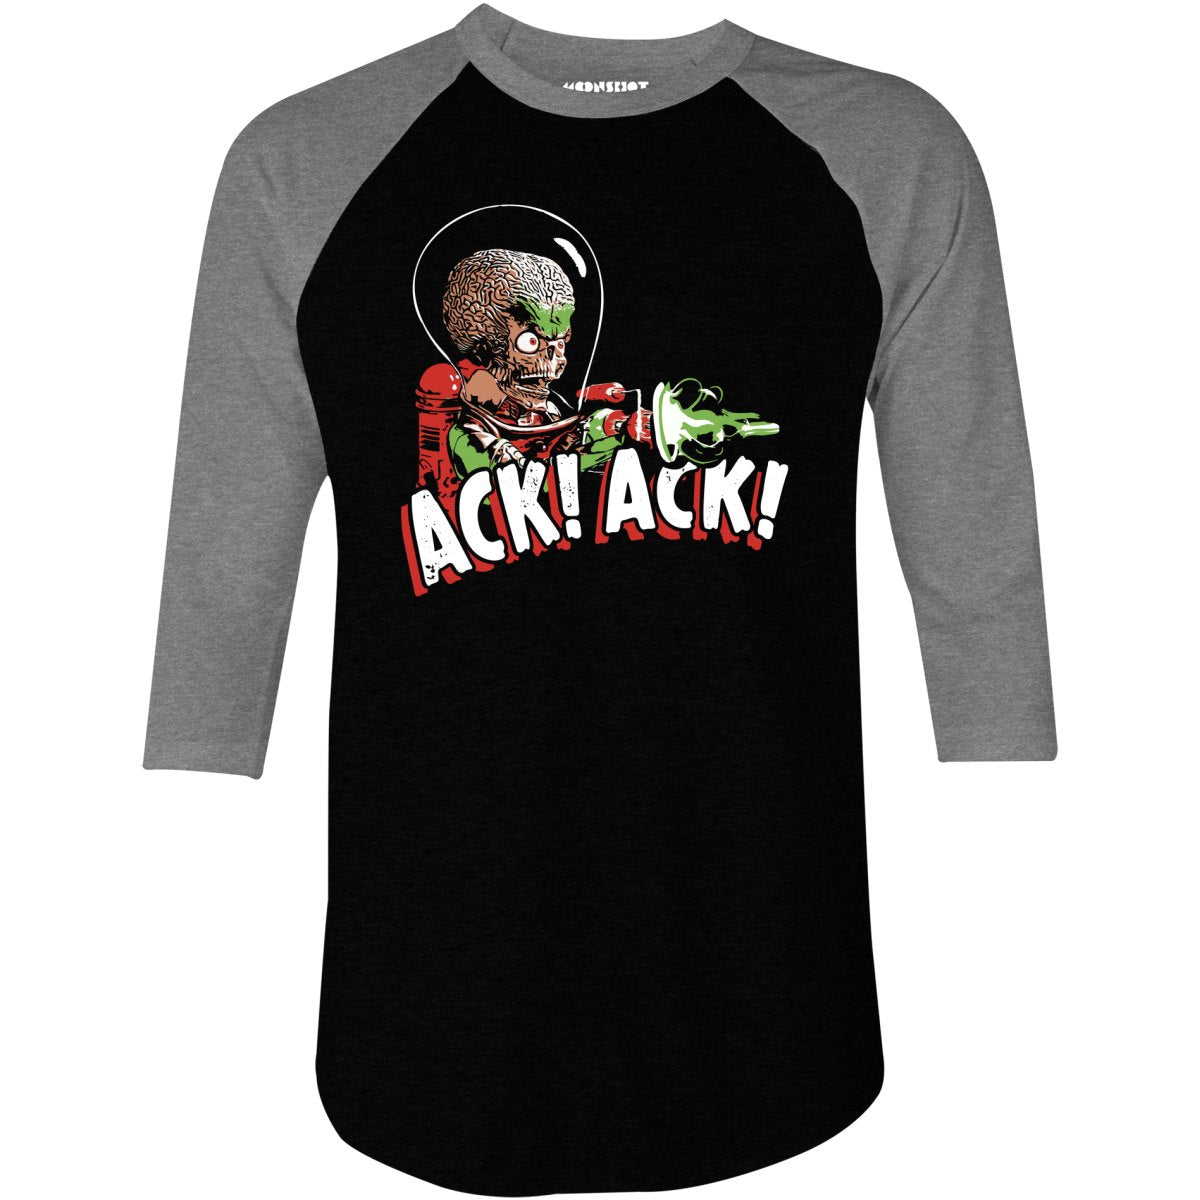 Ack! Ack! - 3/4 Sleeve Raglan T-Shirt